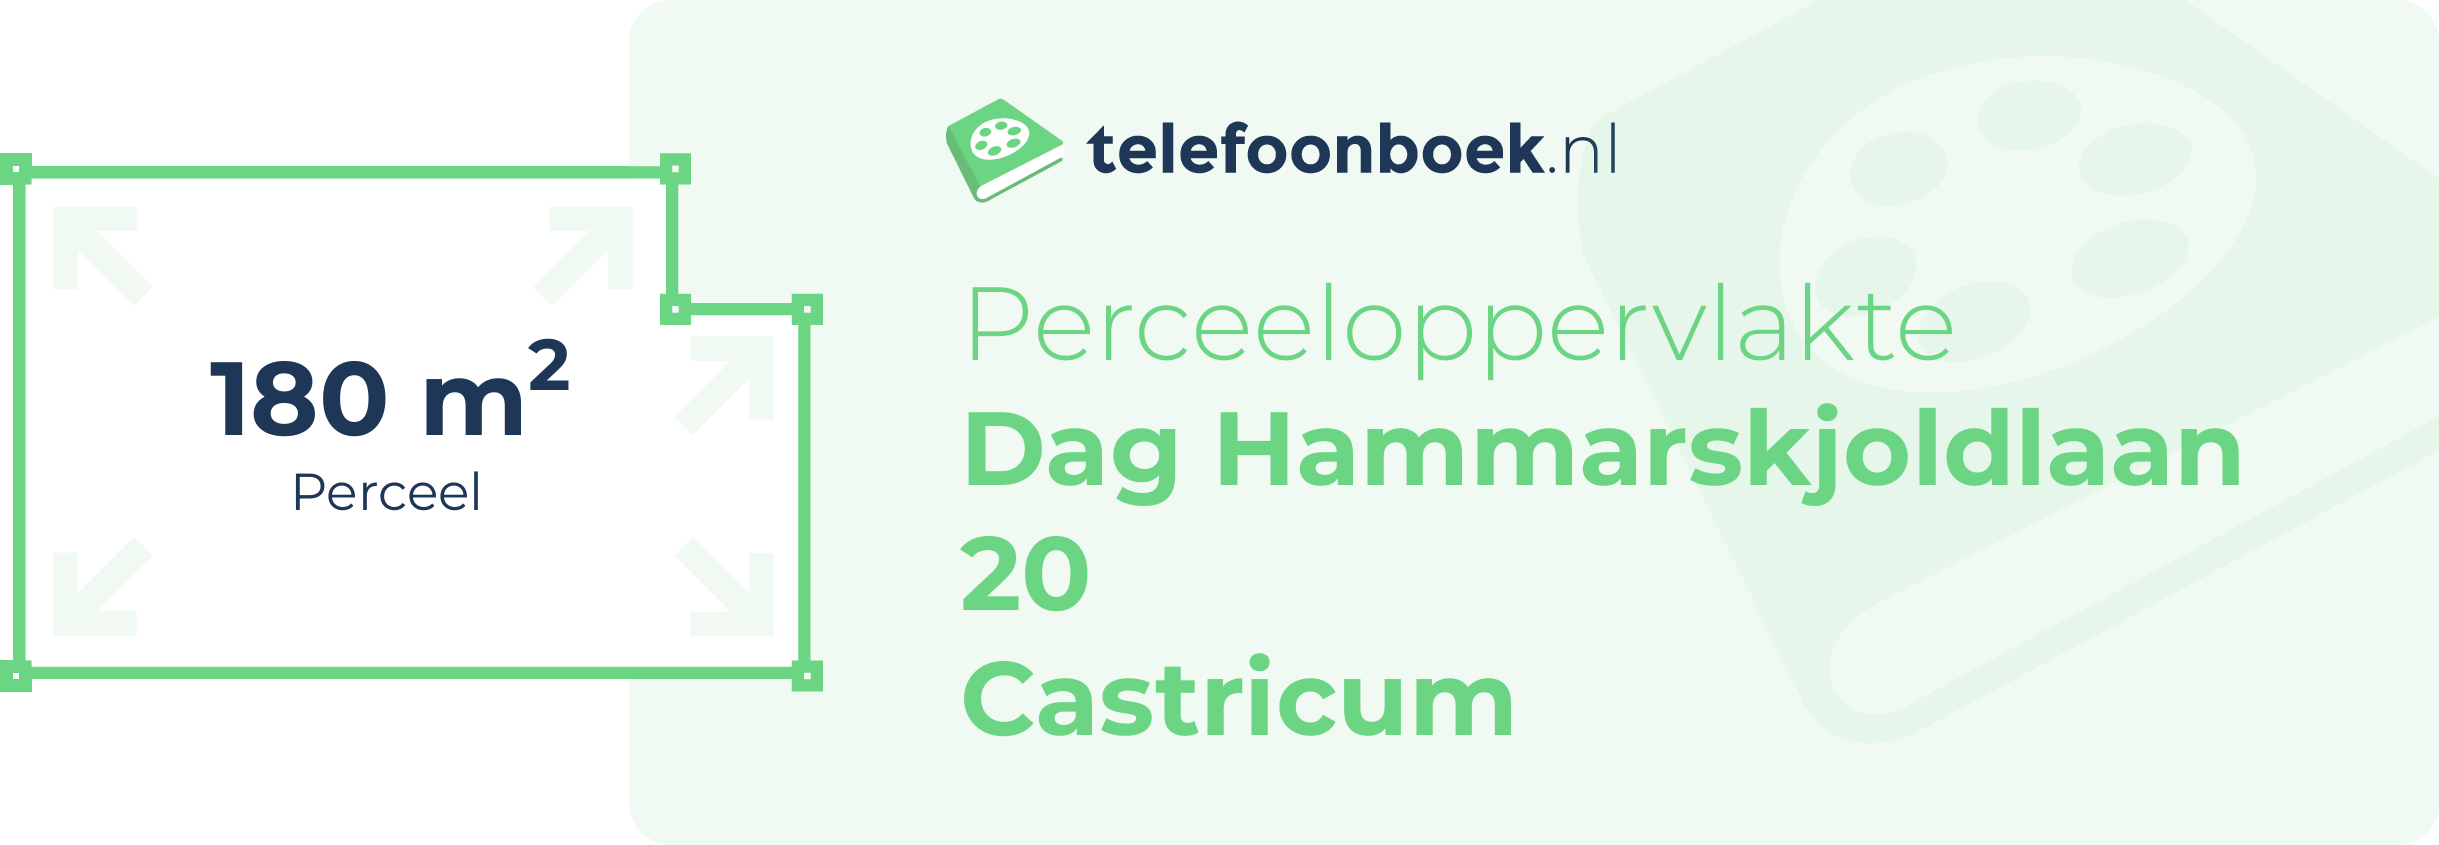 Perceeloppervlakte Dag Hammarskjoldlaan 20 Castricum